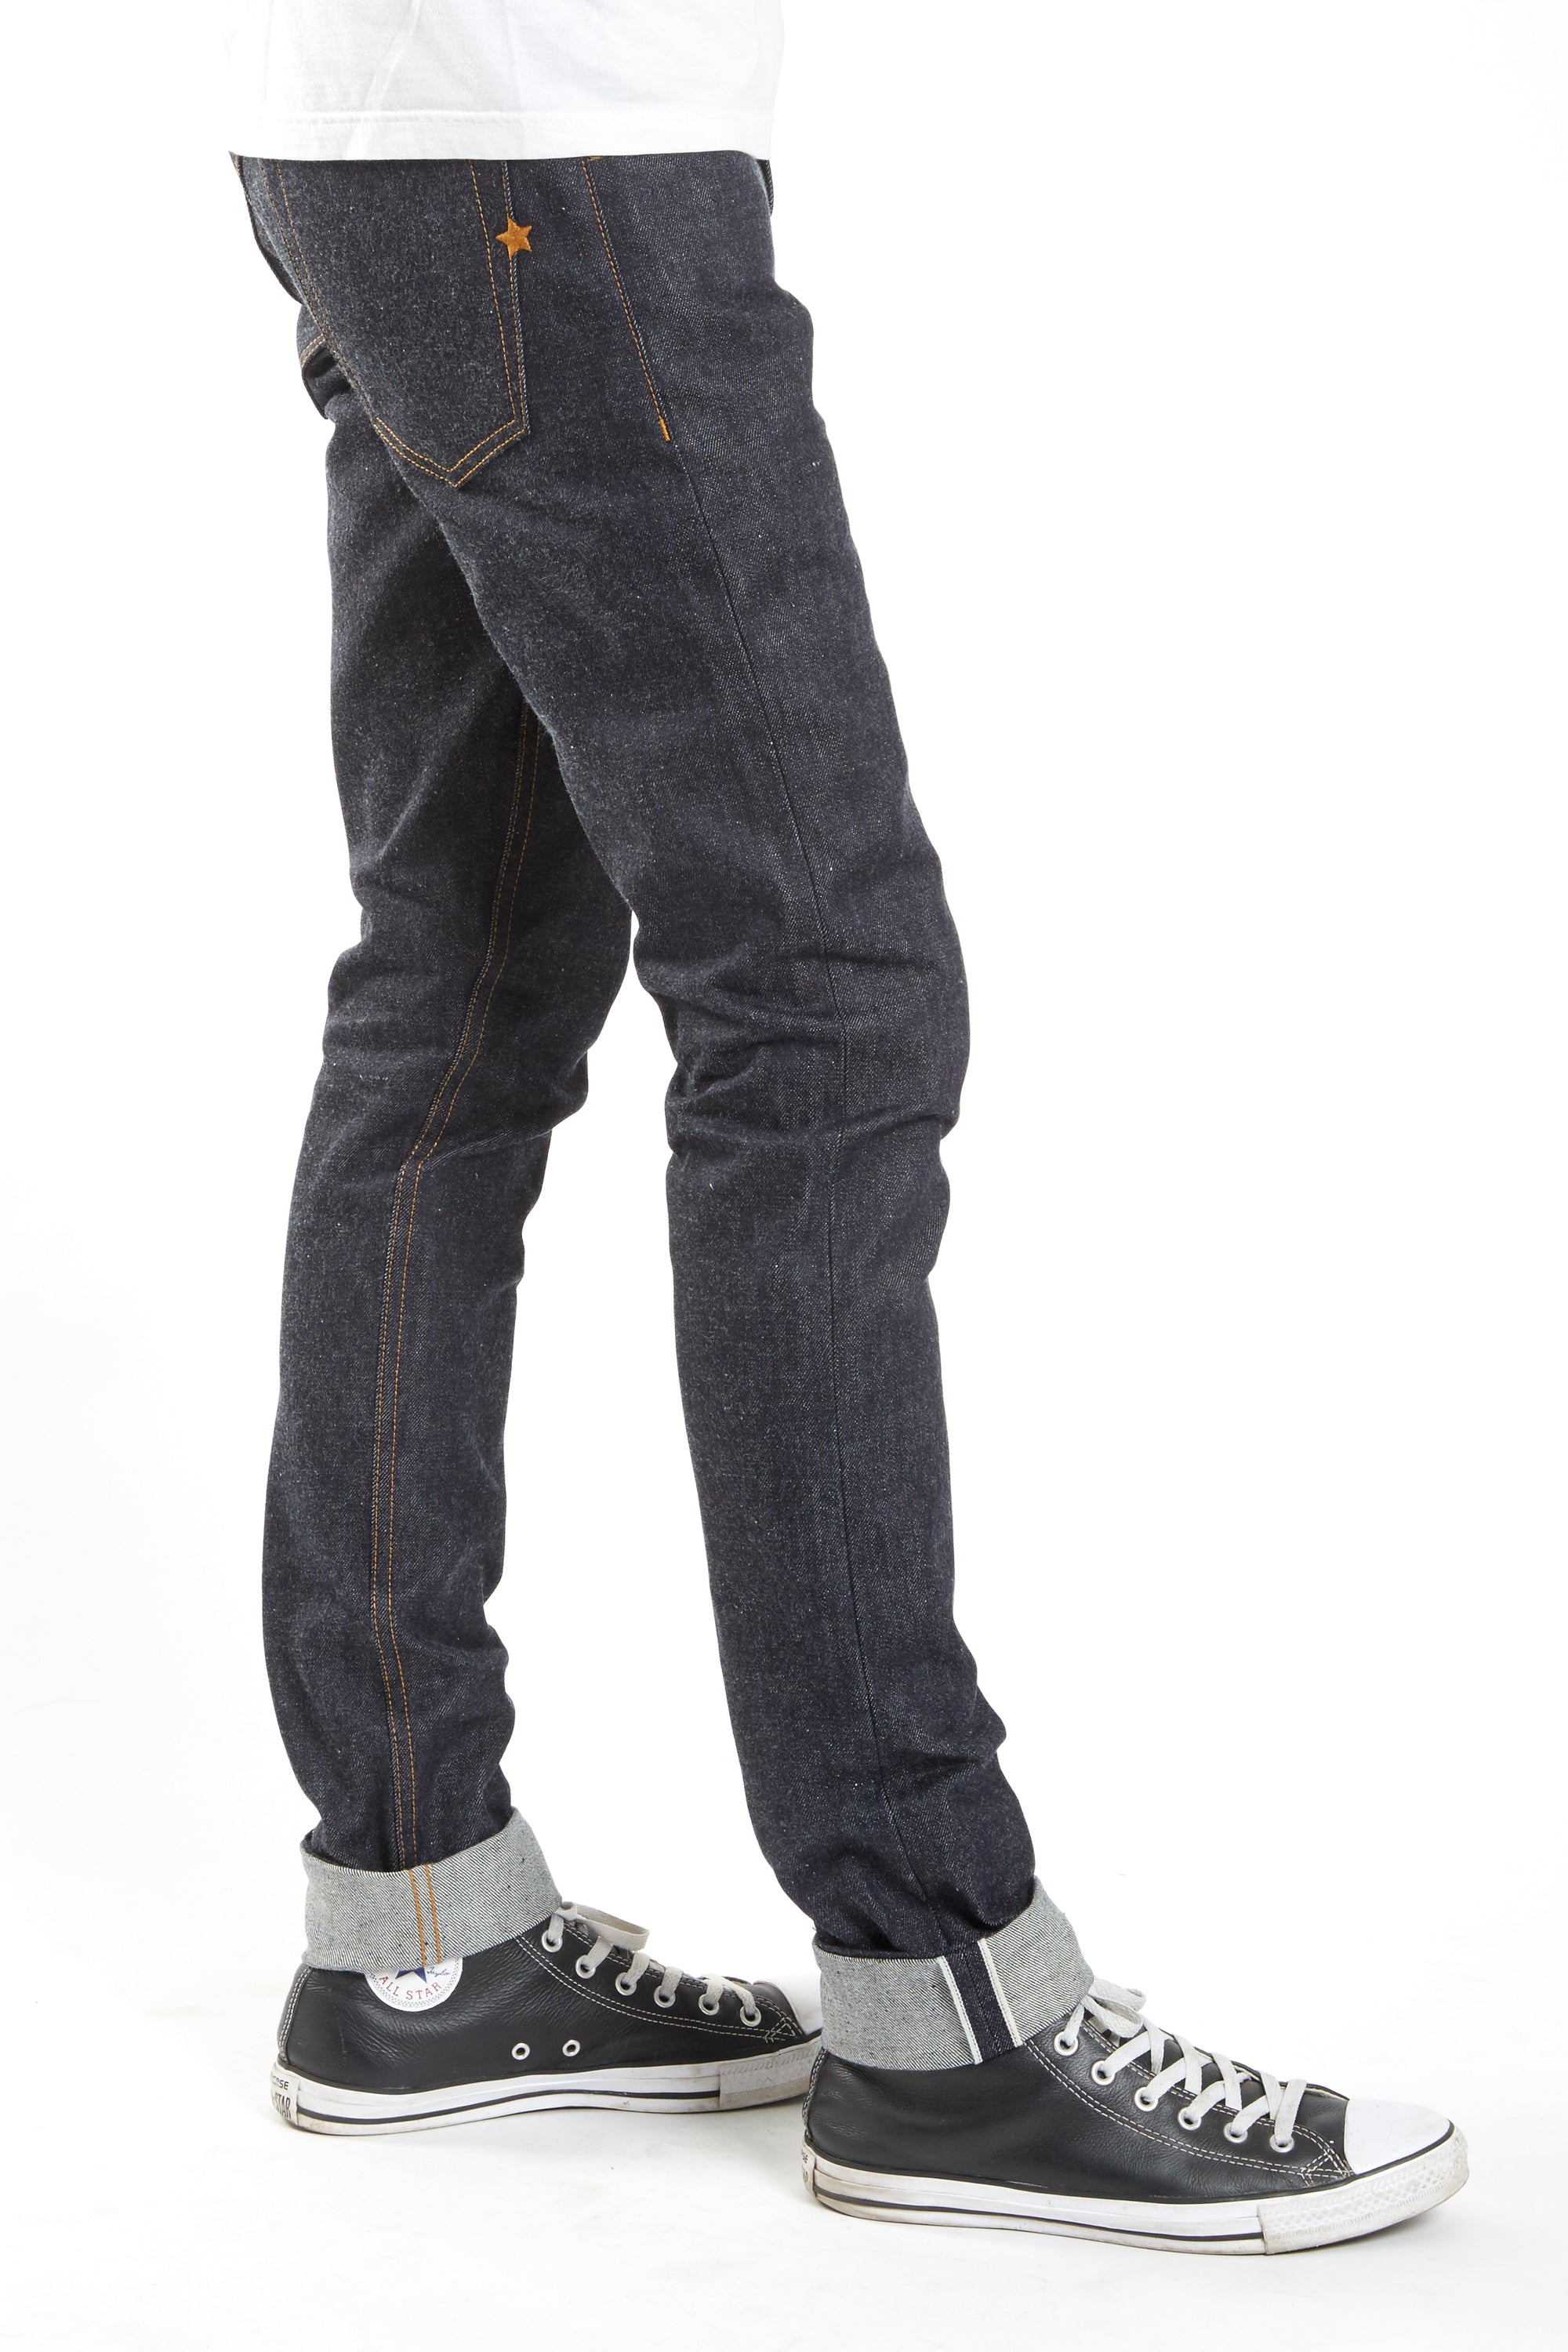 Brave Star Jeans Mens 35 Blue Straight Selvedge Dark Wash Cotton Cone Denim